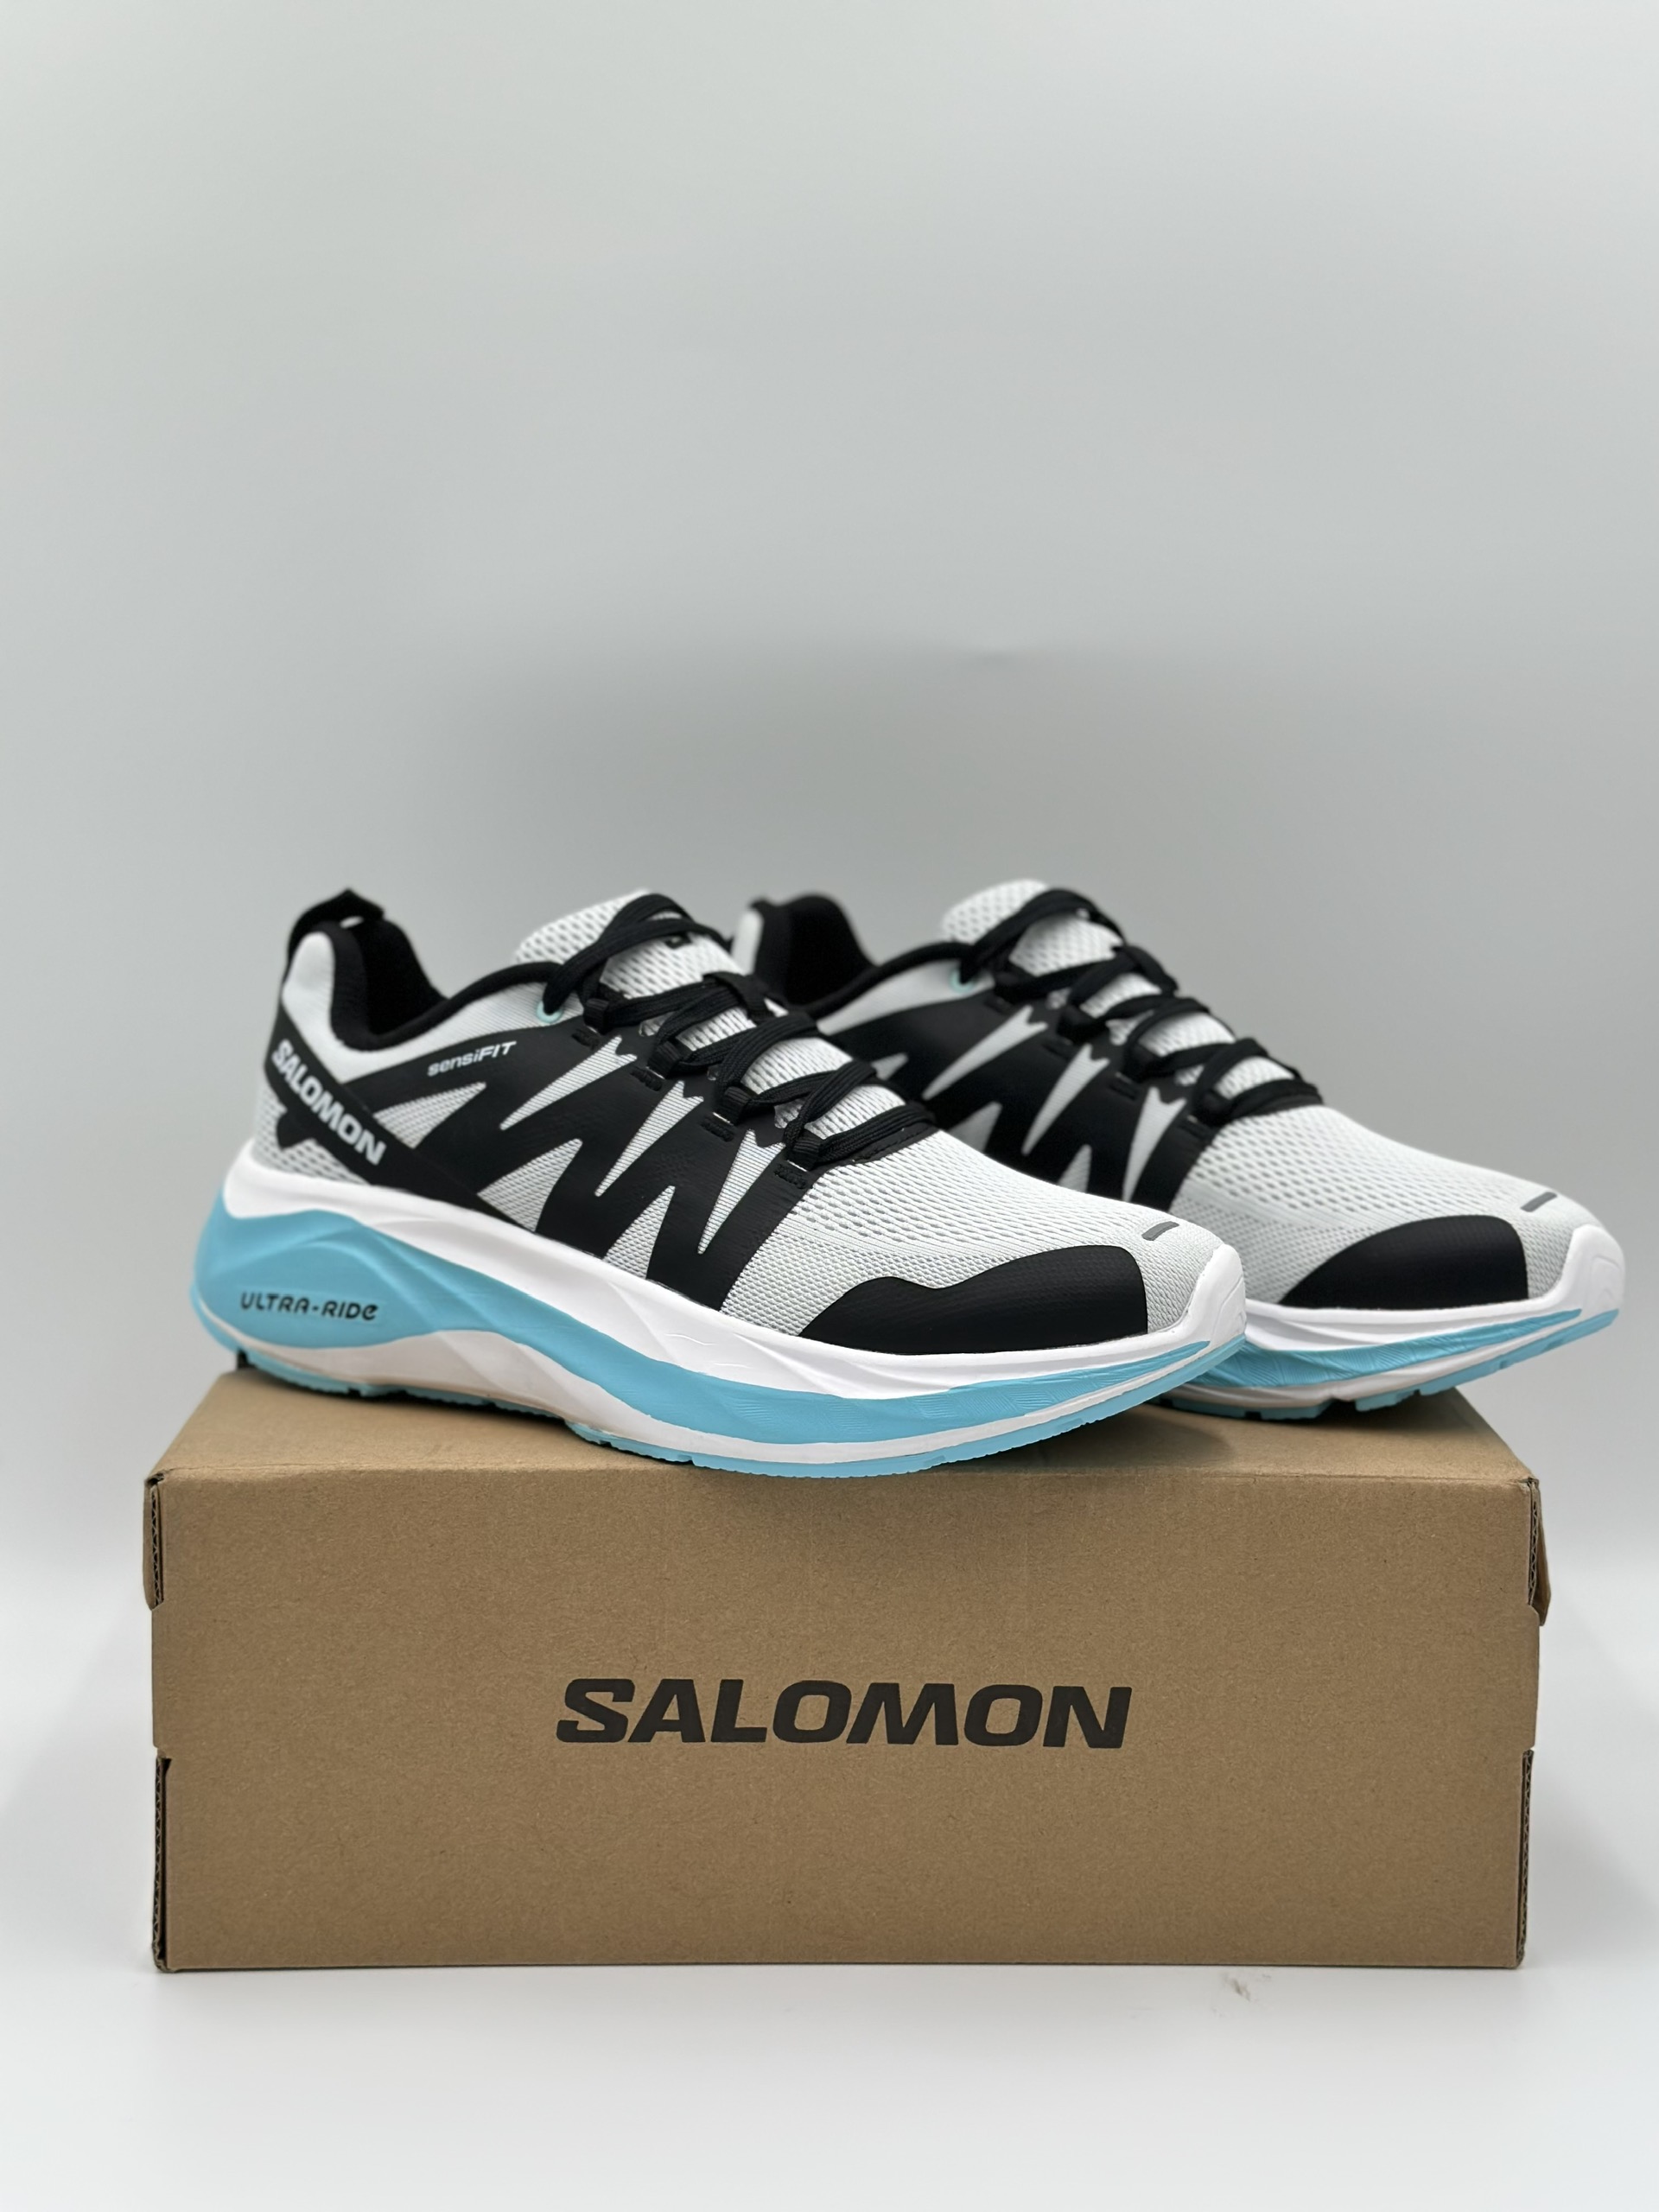 [5-7/5 Voucher 10%] SALE CHÍNH HÃNG 50%  Giày Chạy Salomon Ultra-Ride Sensi Fit  Size 36-45